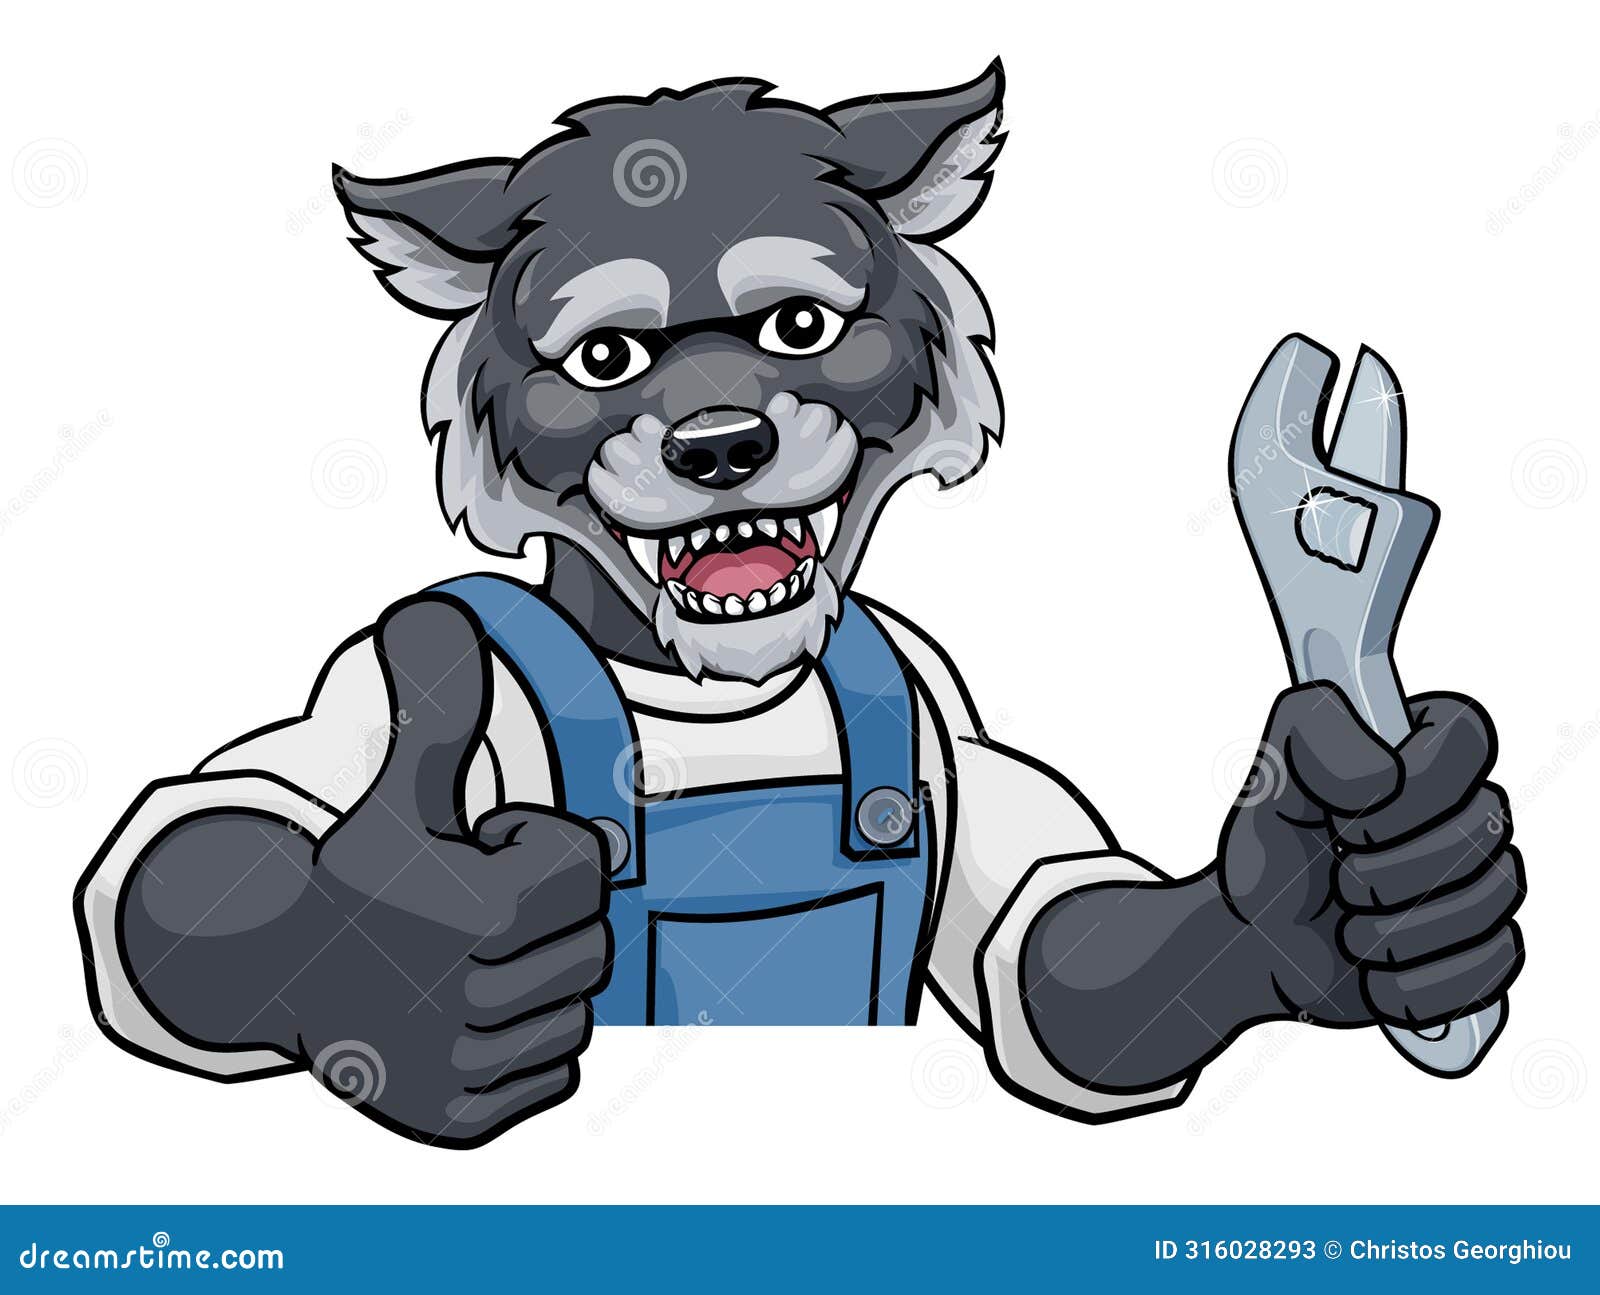 wolf plumber or mechanic holding spanner